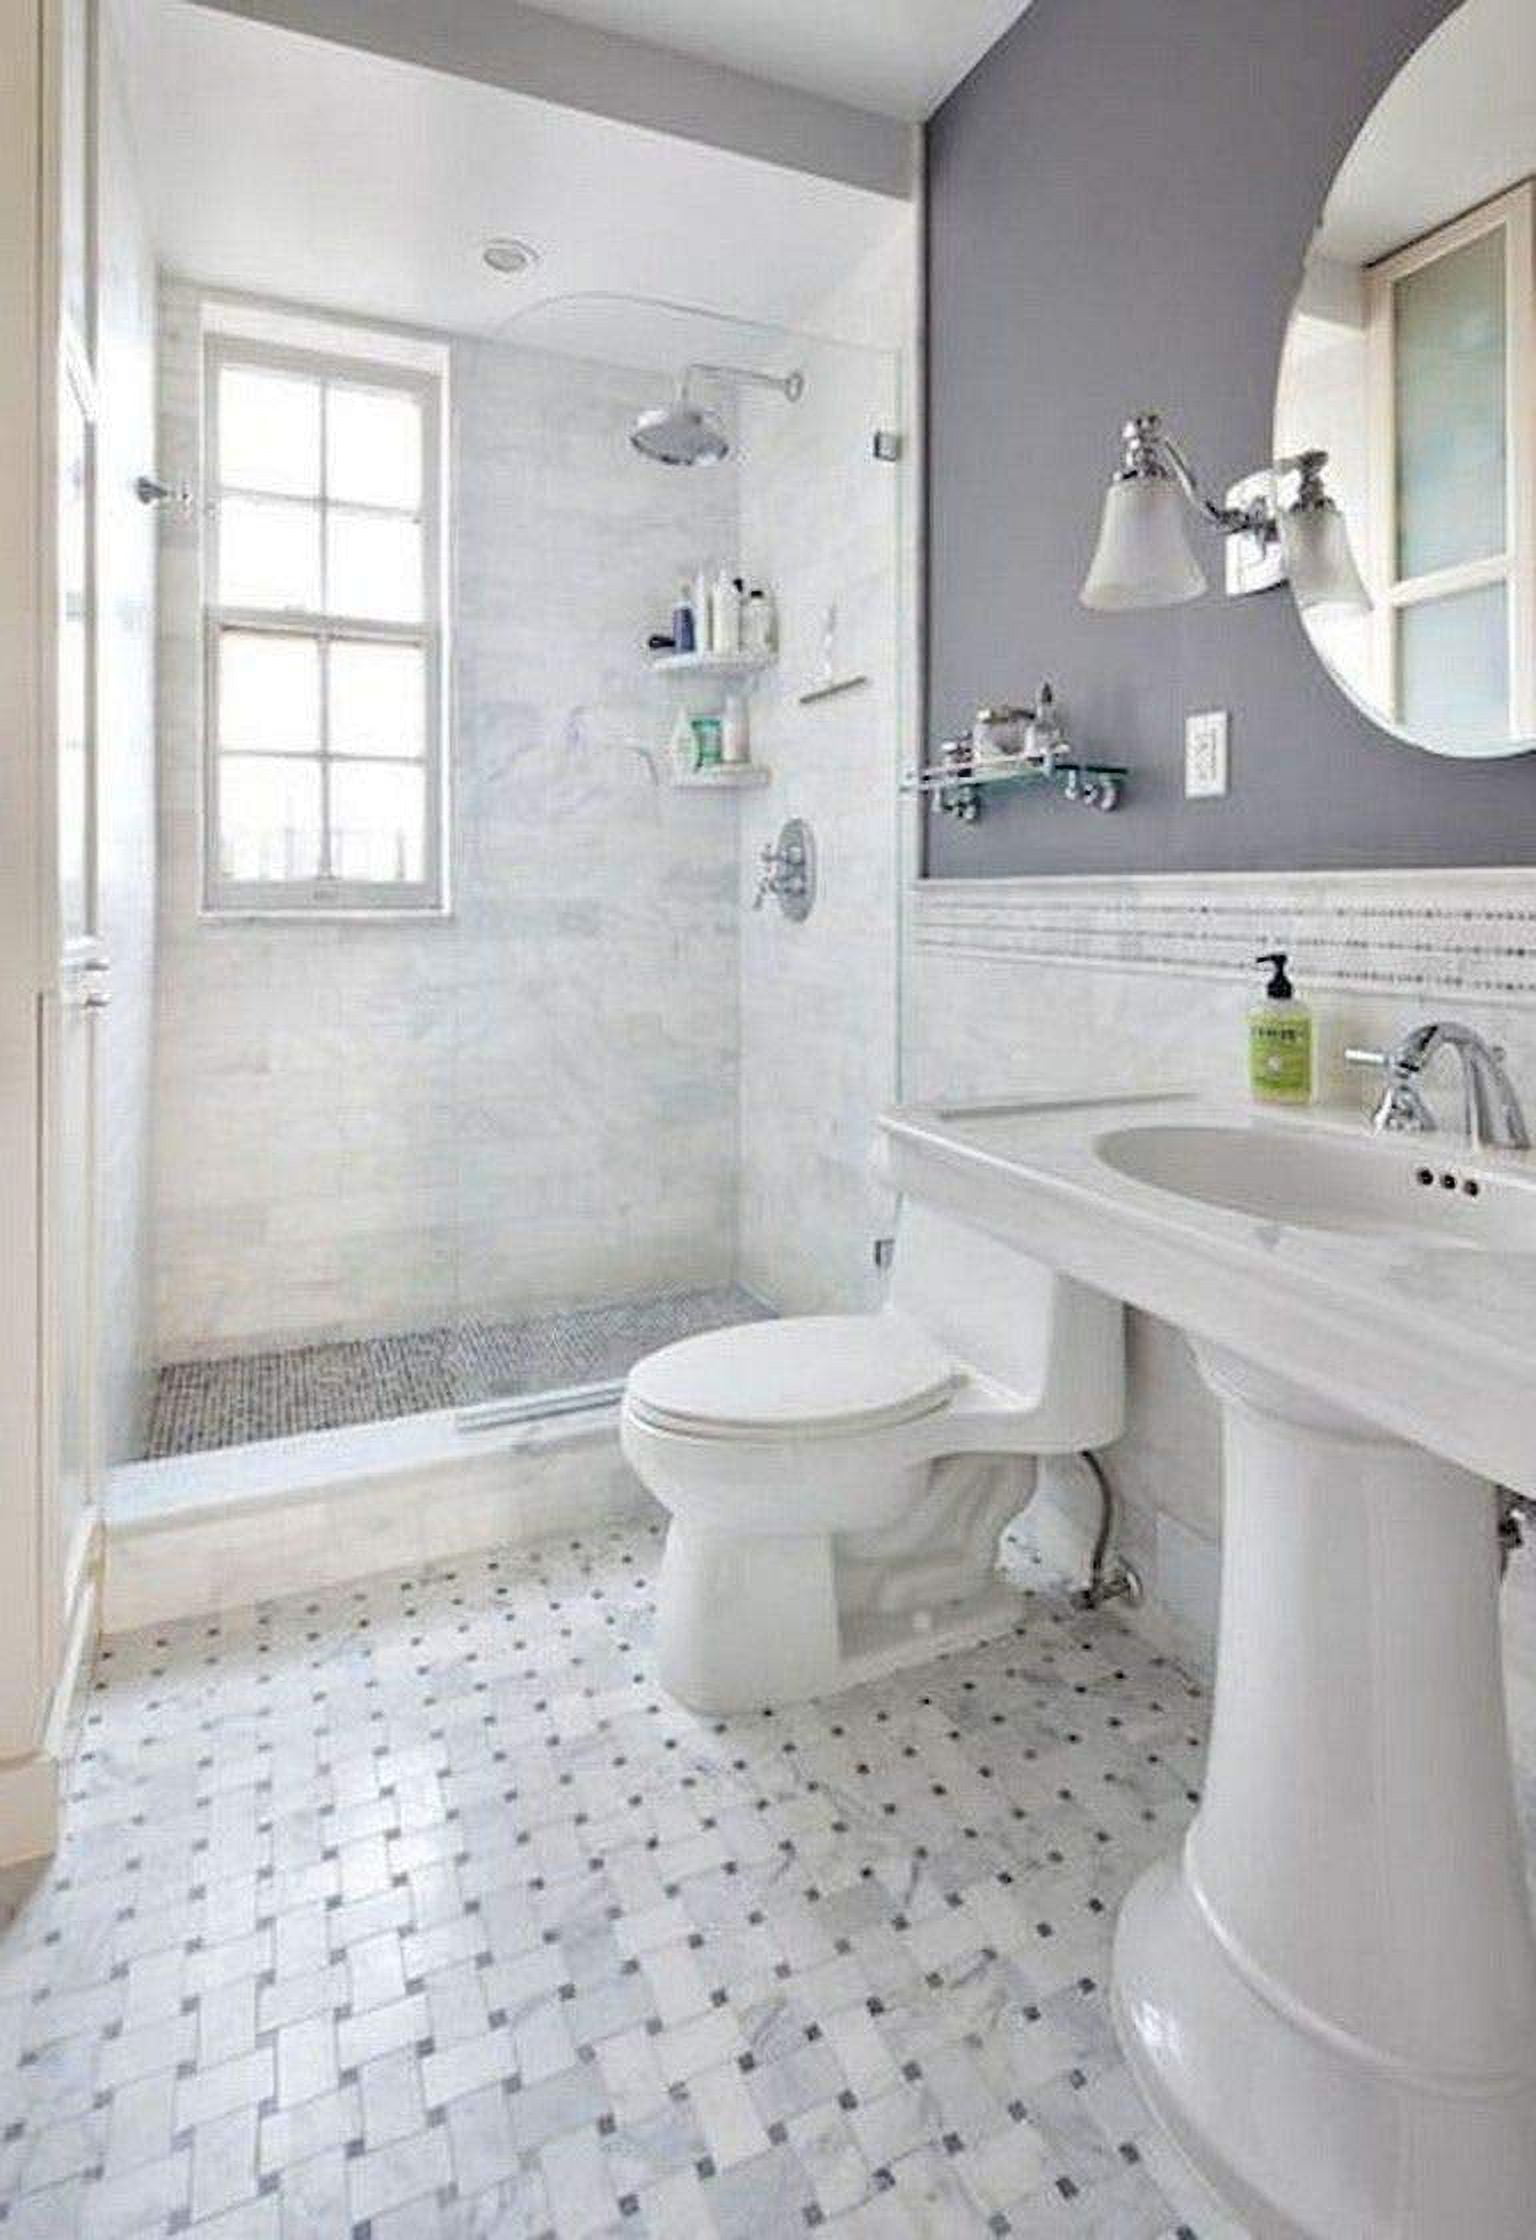 Unelko 79997 Eliminate Shower Tub & Tile Cleaner